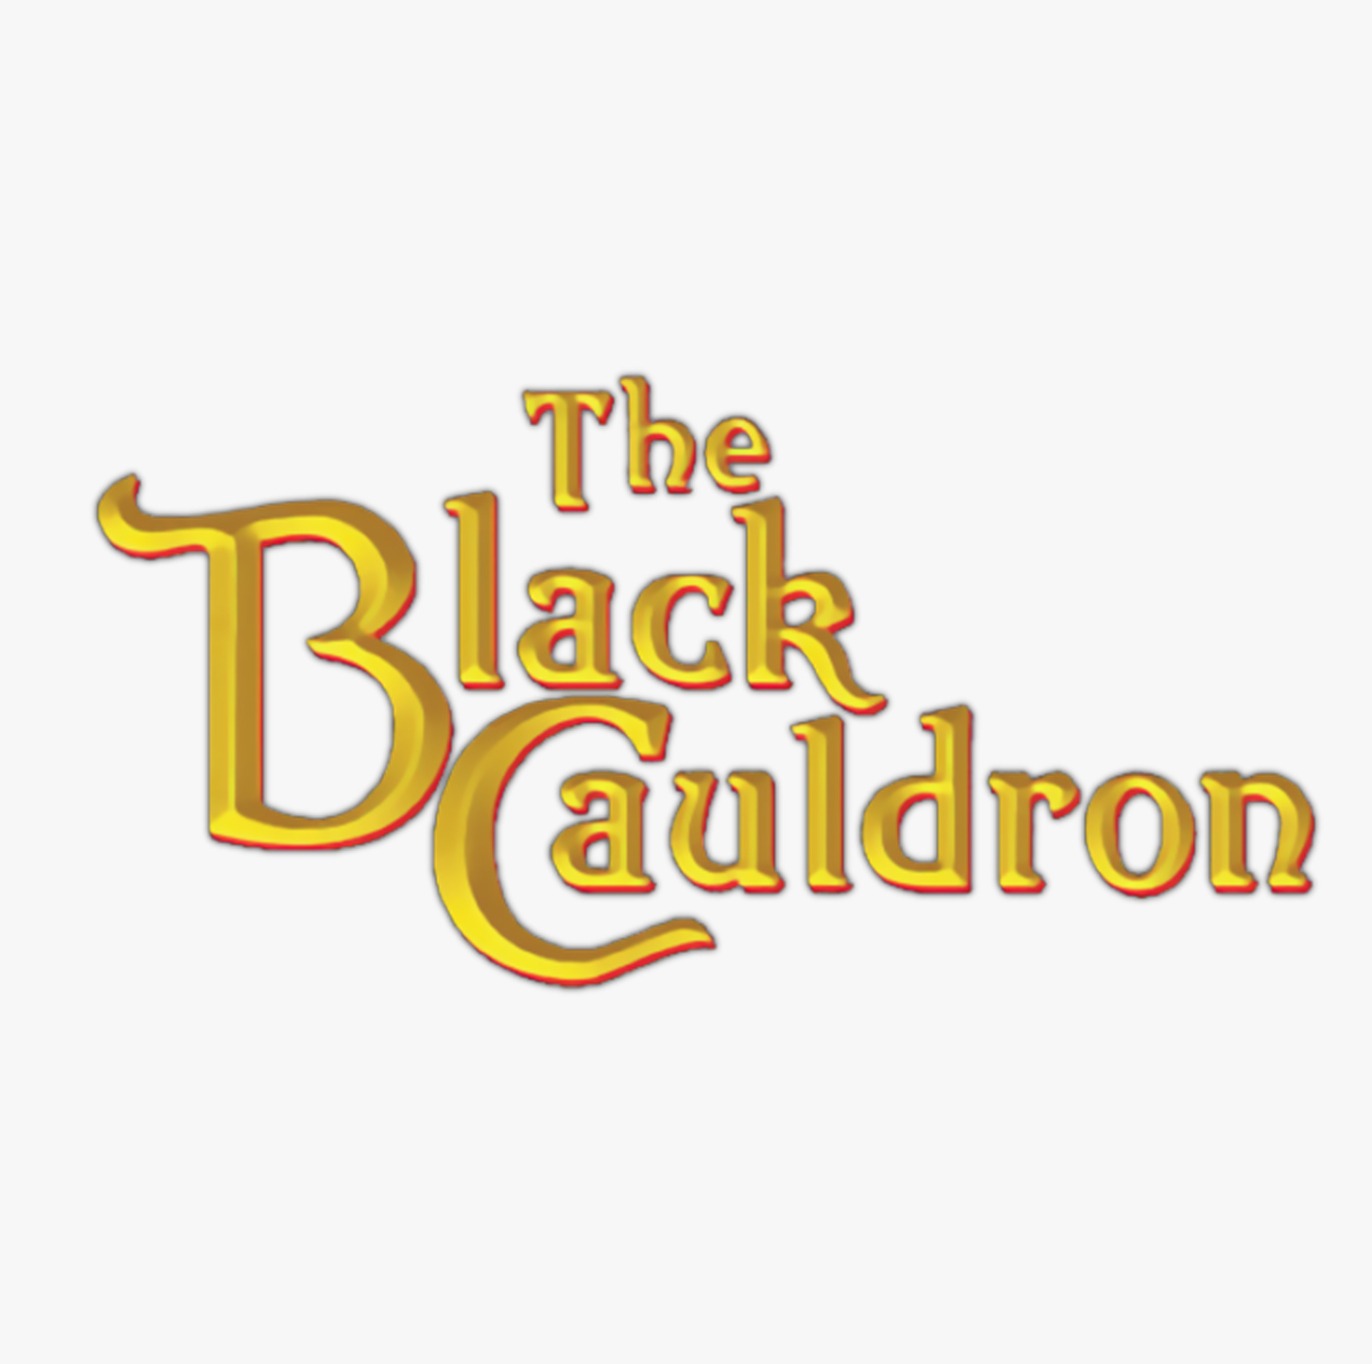 The Black Cauldron